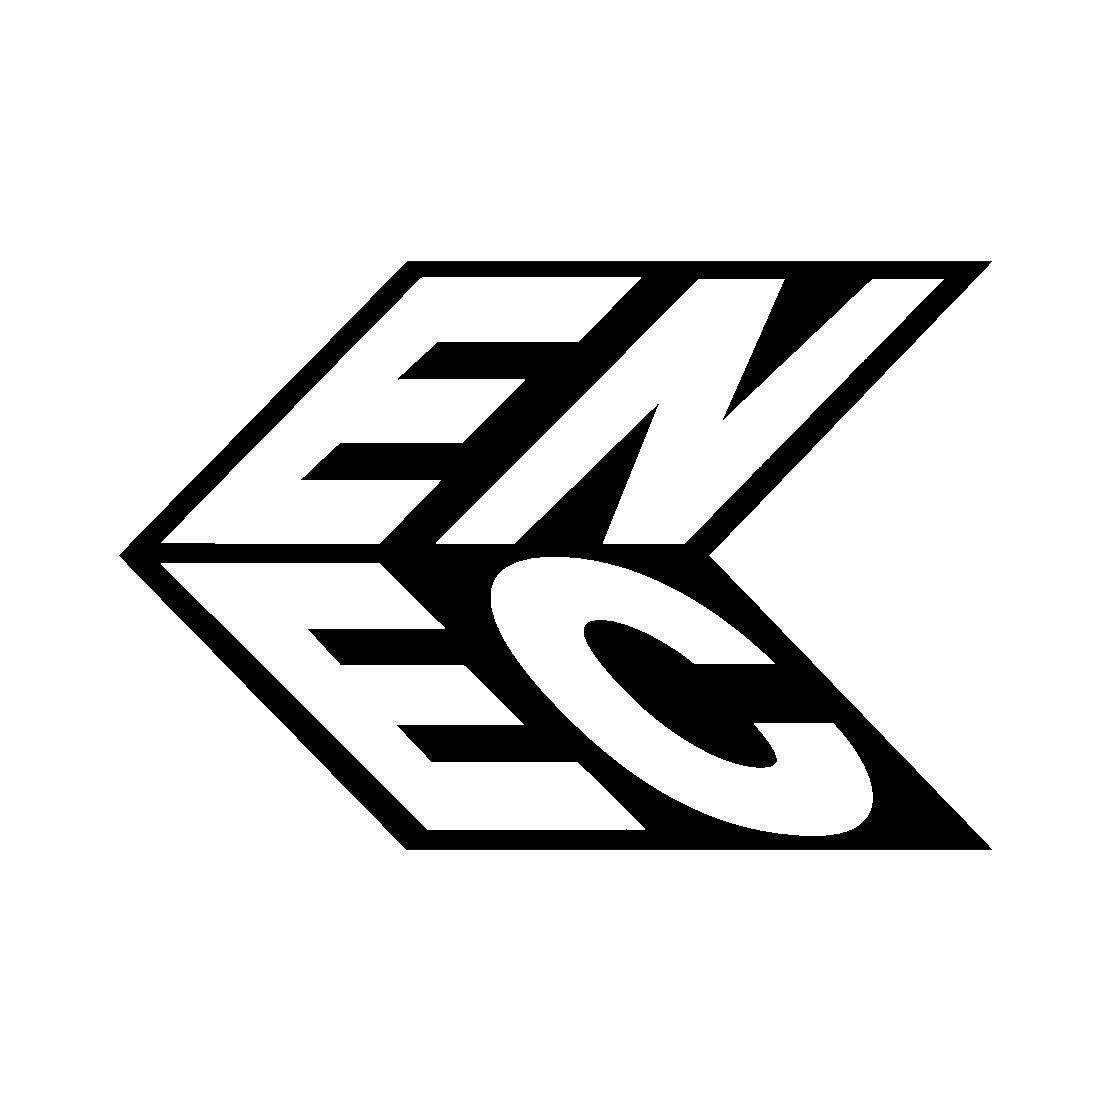 ENEC Mark - Europe